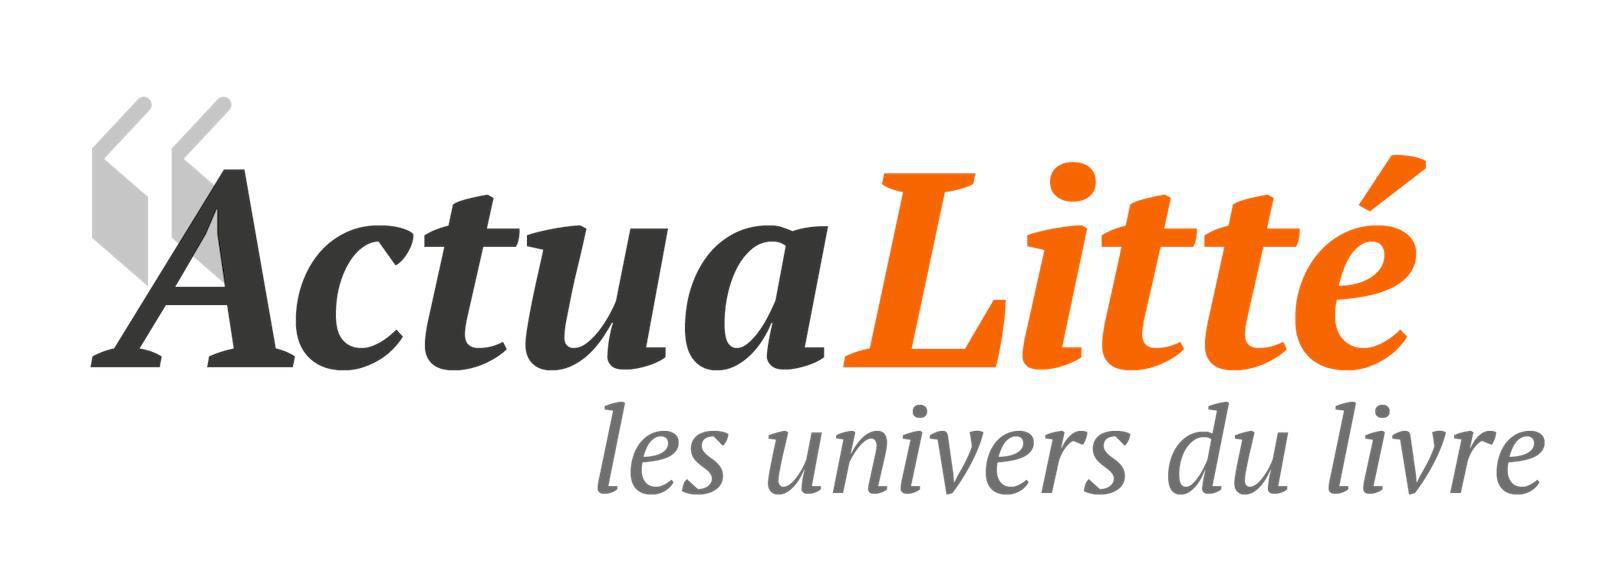 logo_actualitte.com_2017_Edilivre